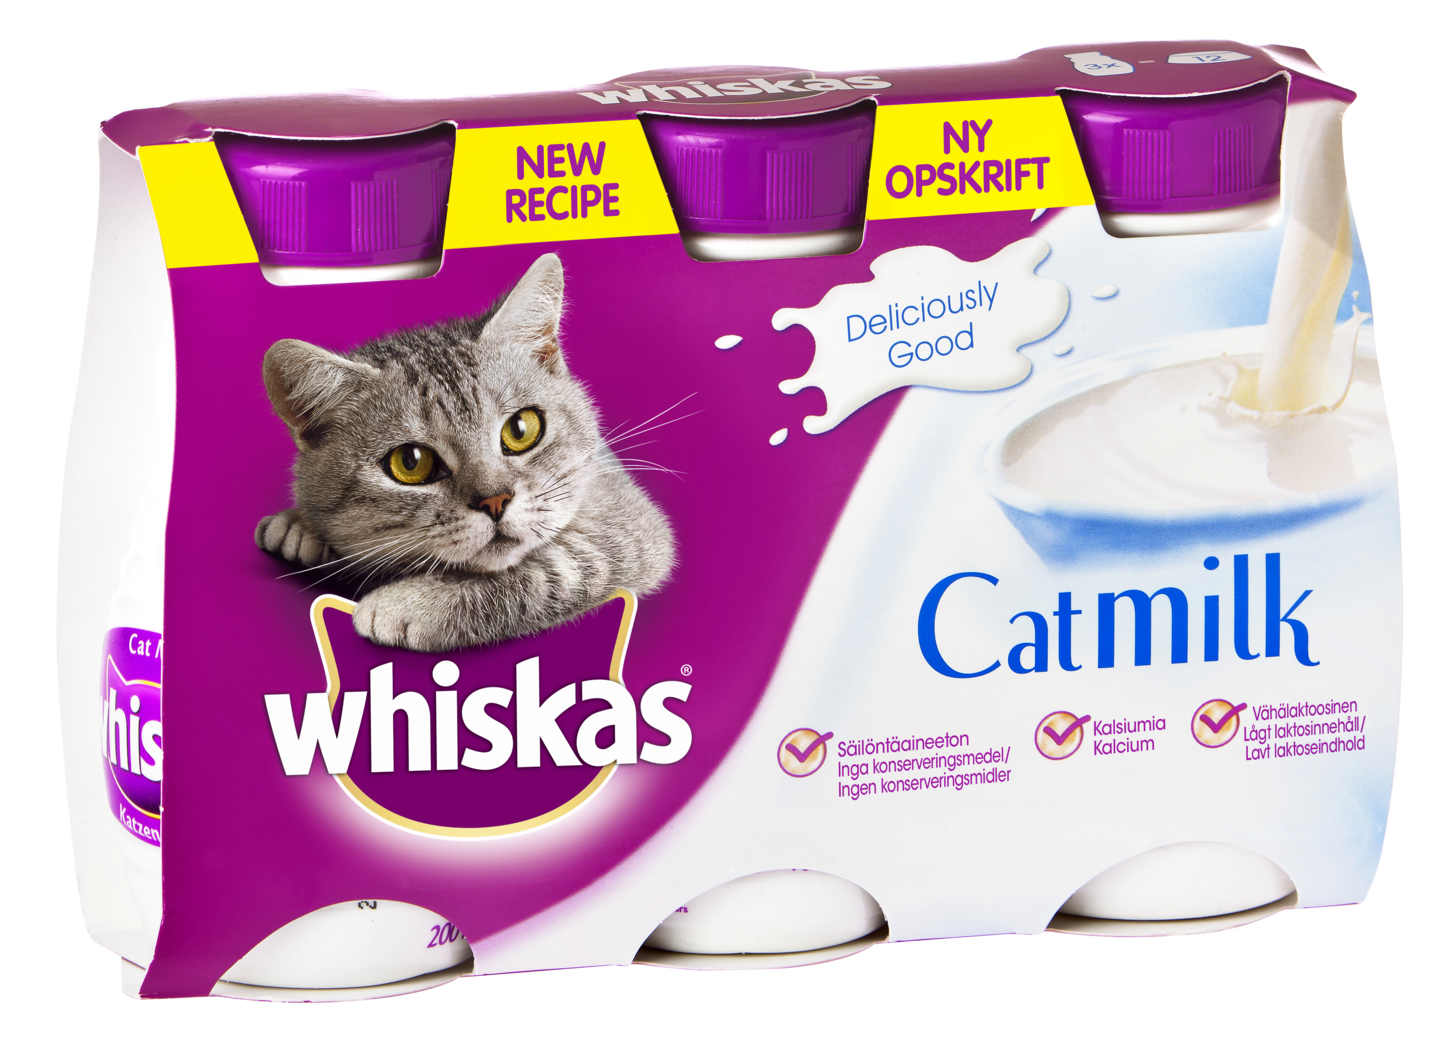 Whiskas 3x200ml Catmilk kissanmaito